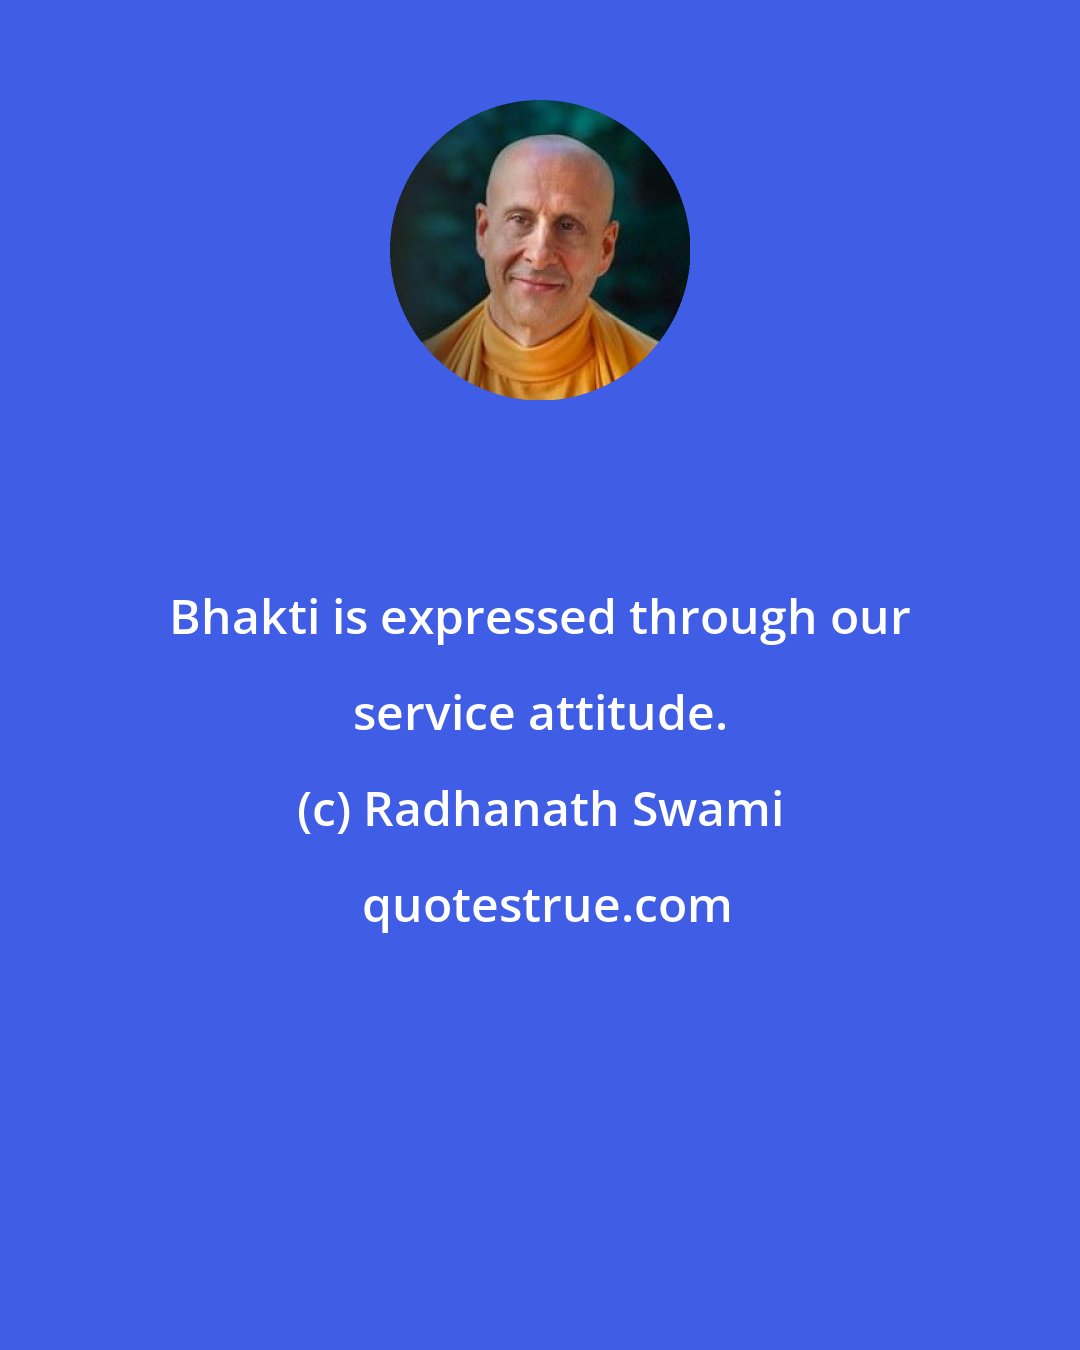 Radhanath Swami: Bhakti is expressed through our service attitude.